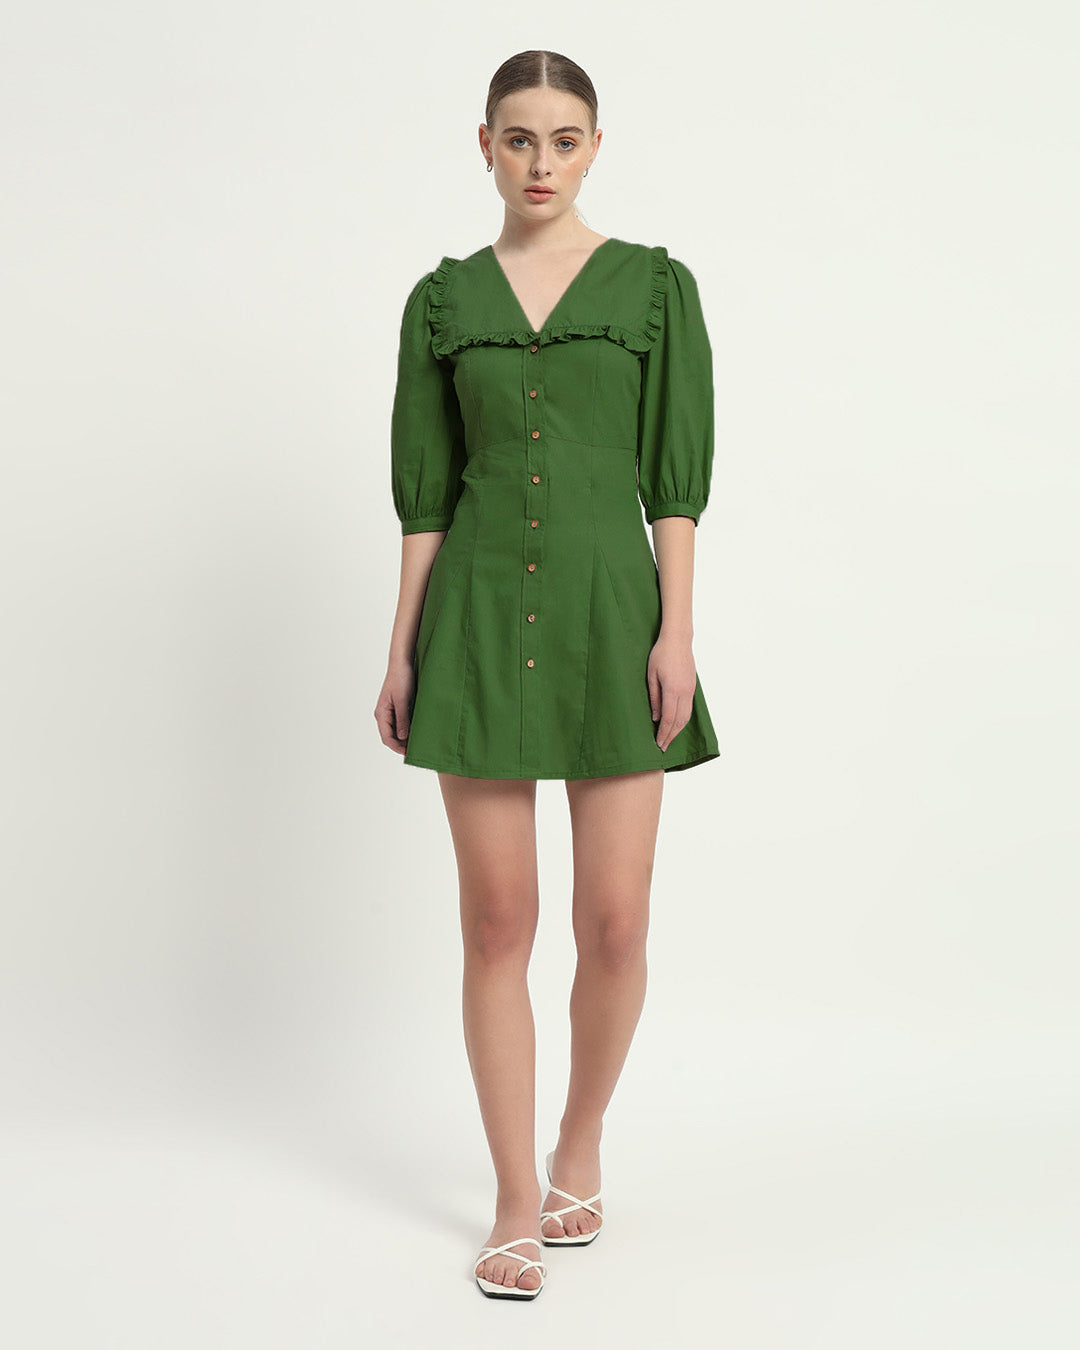 The Emerald Isabela Cotton Dress